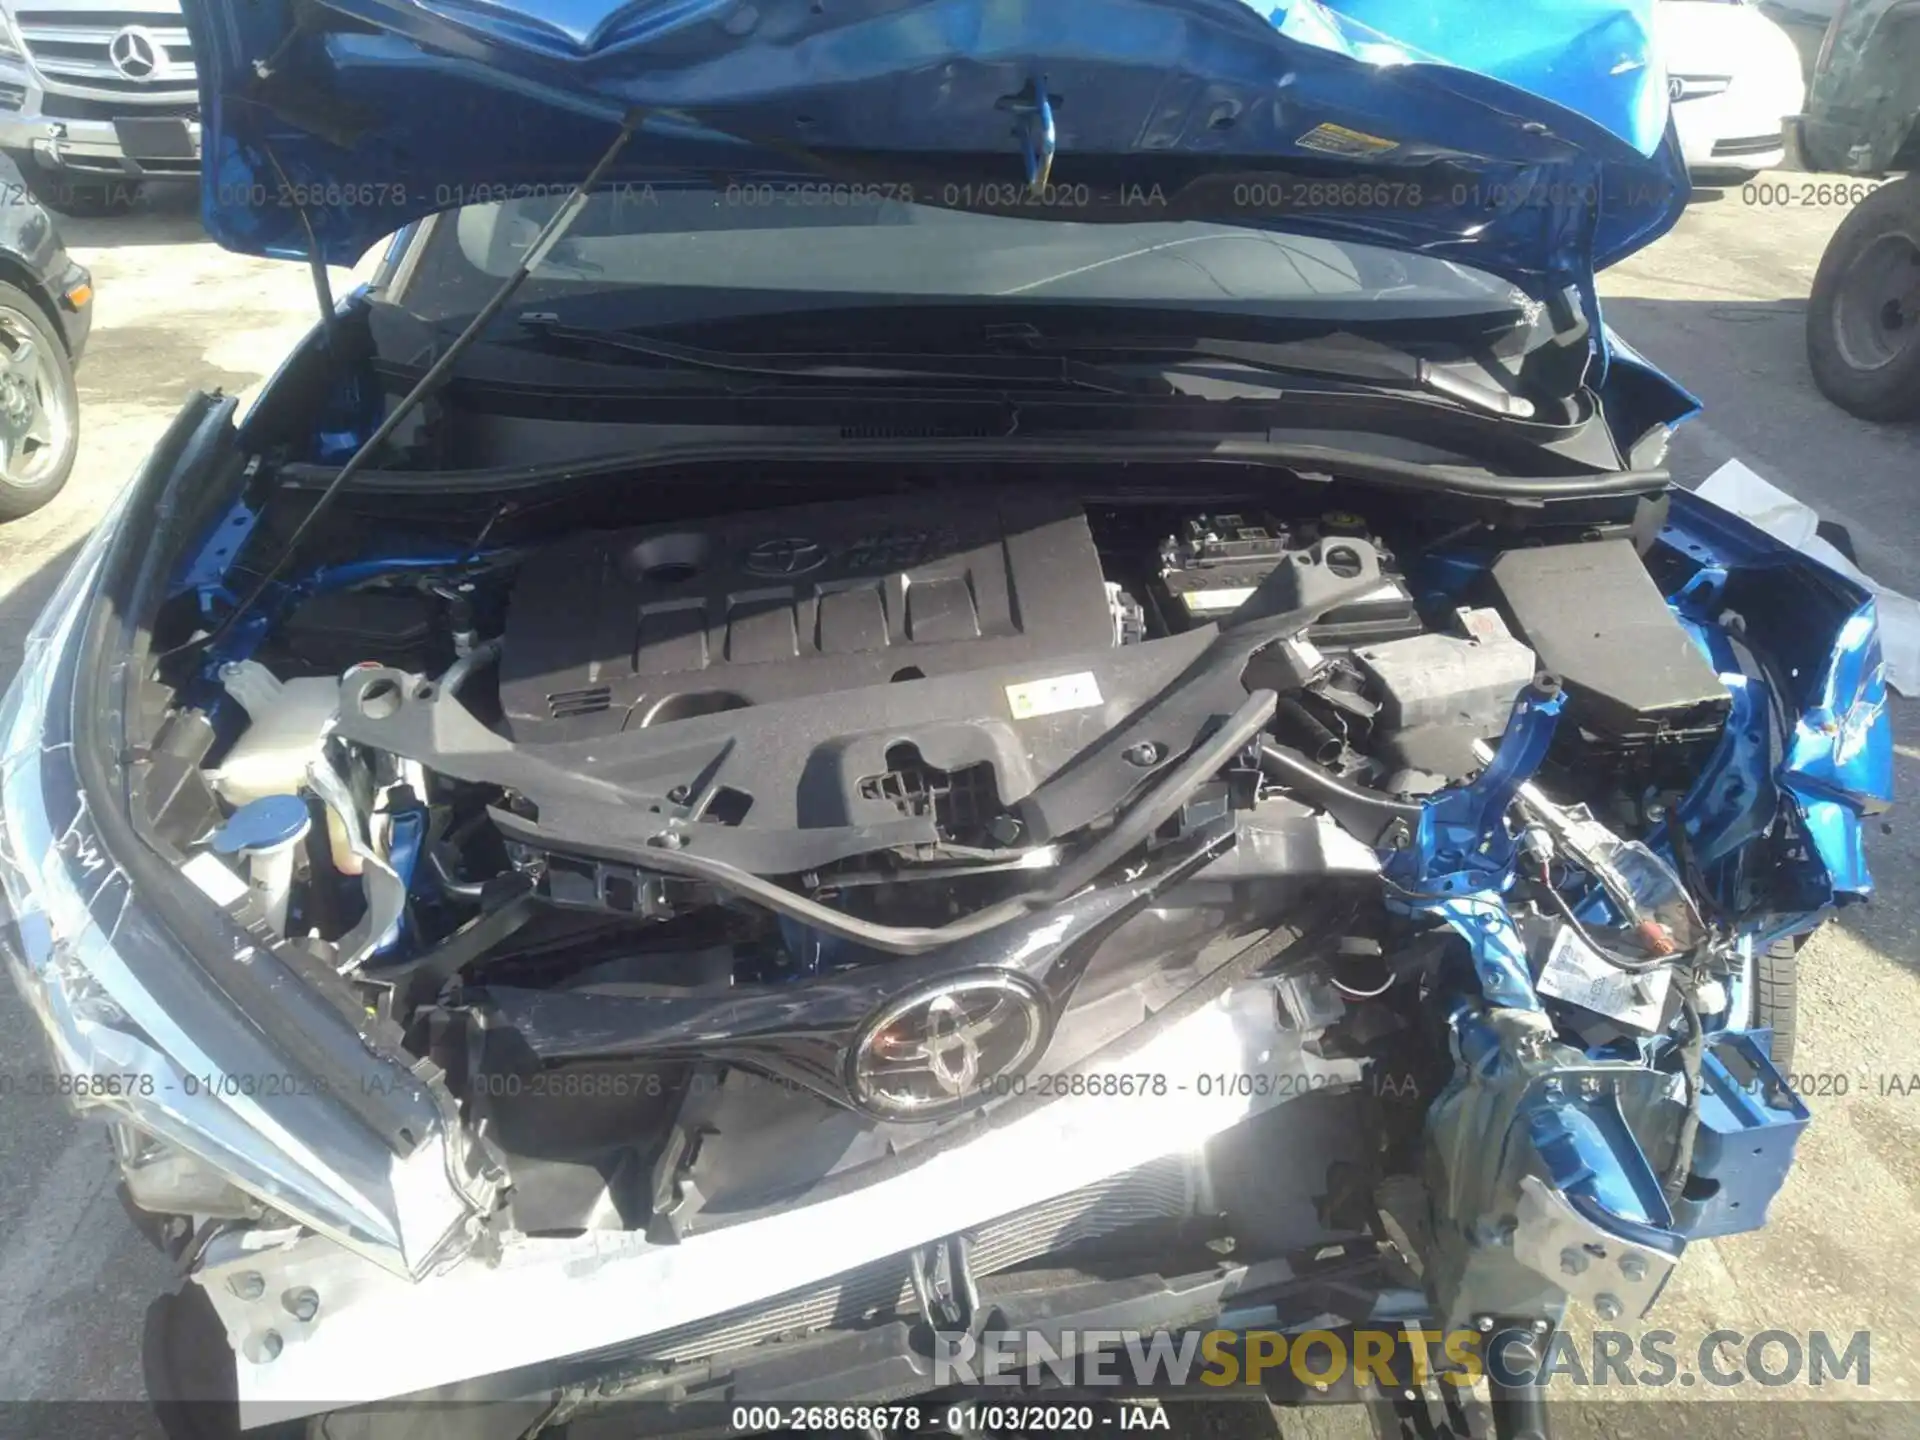 10 Photograph of a damaged car NMTKHMBX9KR075006 TOYOTA C-HR 2019